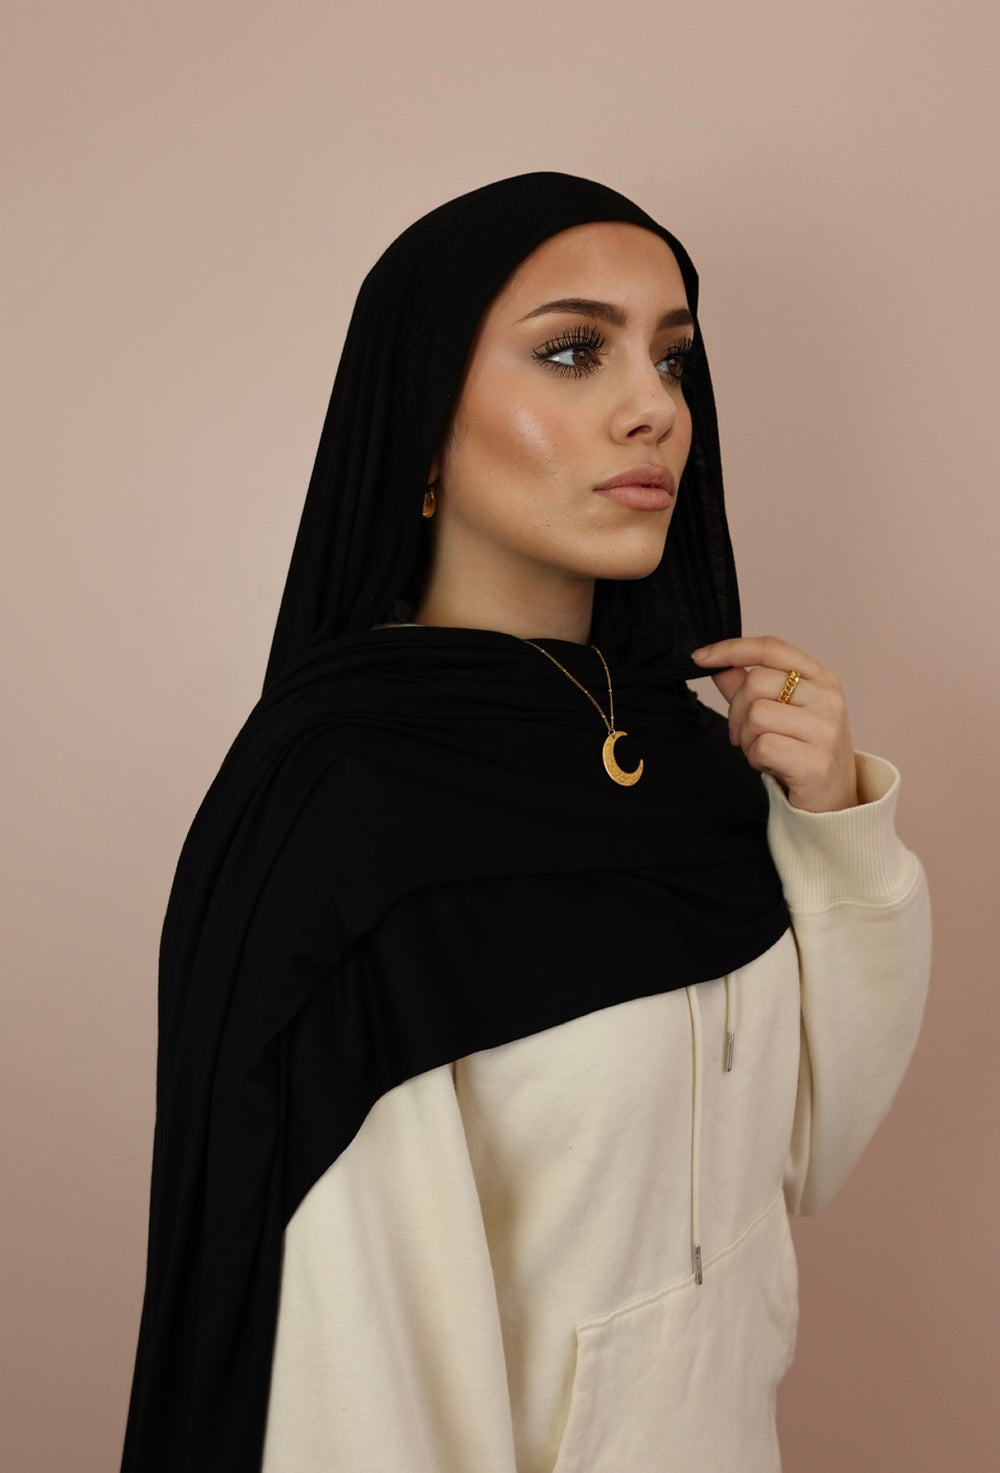 Jersey comfort Hijab